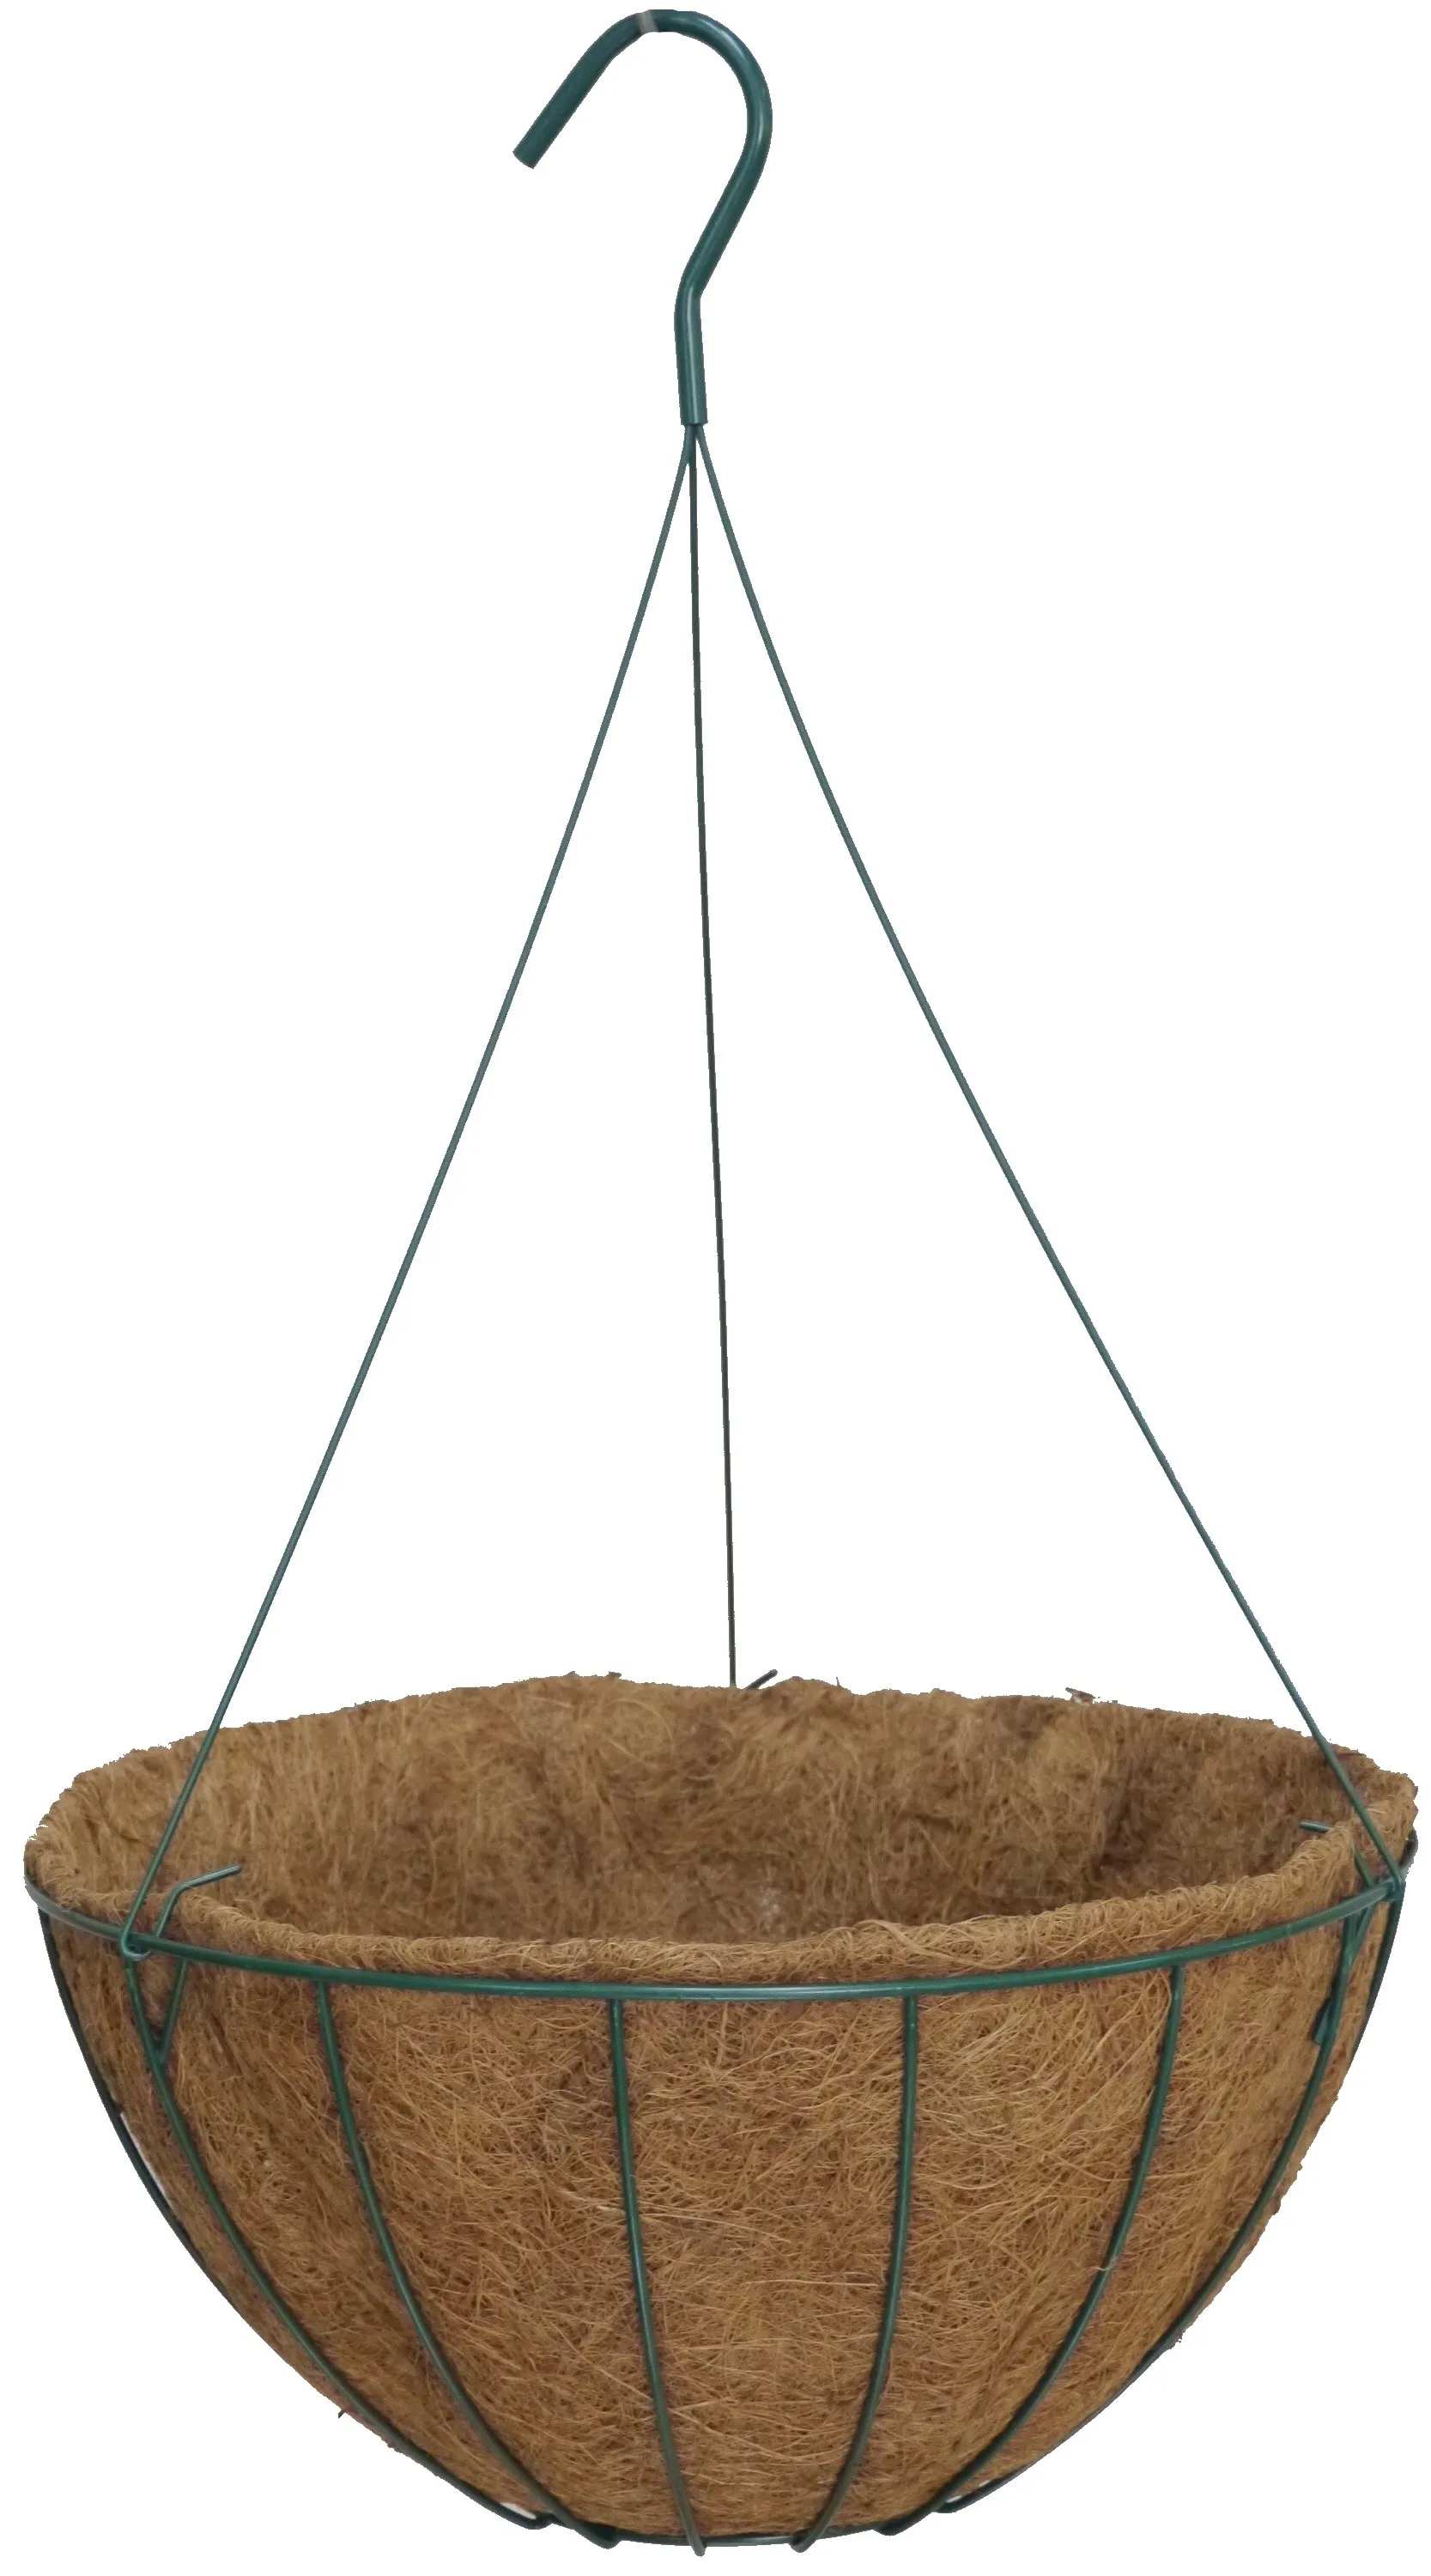 
Modern garden metal coco liner basket hanging basket 